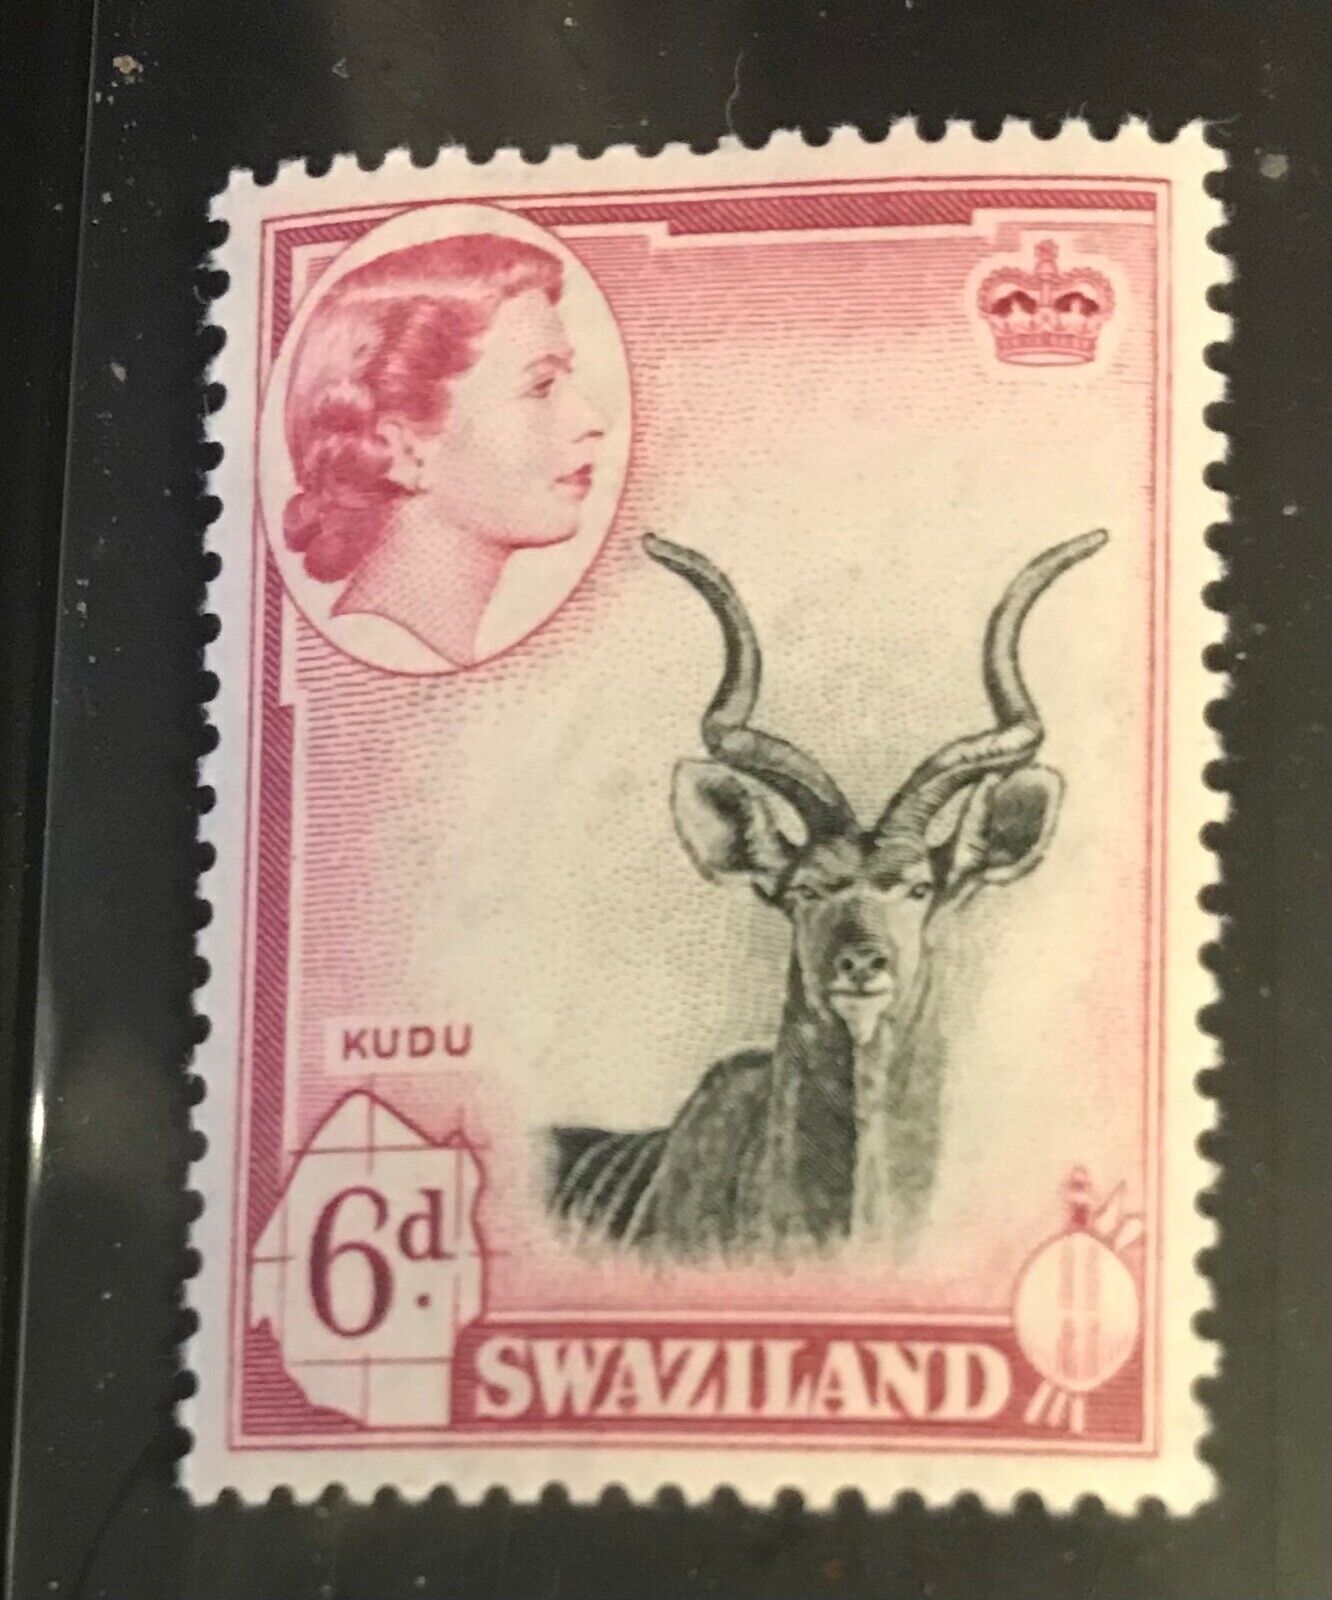 Swaziland Stamp Queen Elizabeth Ll Kudu